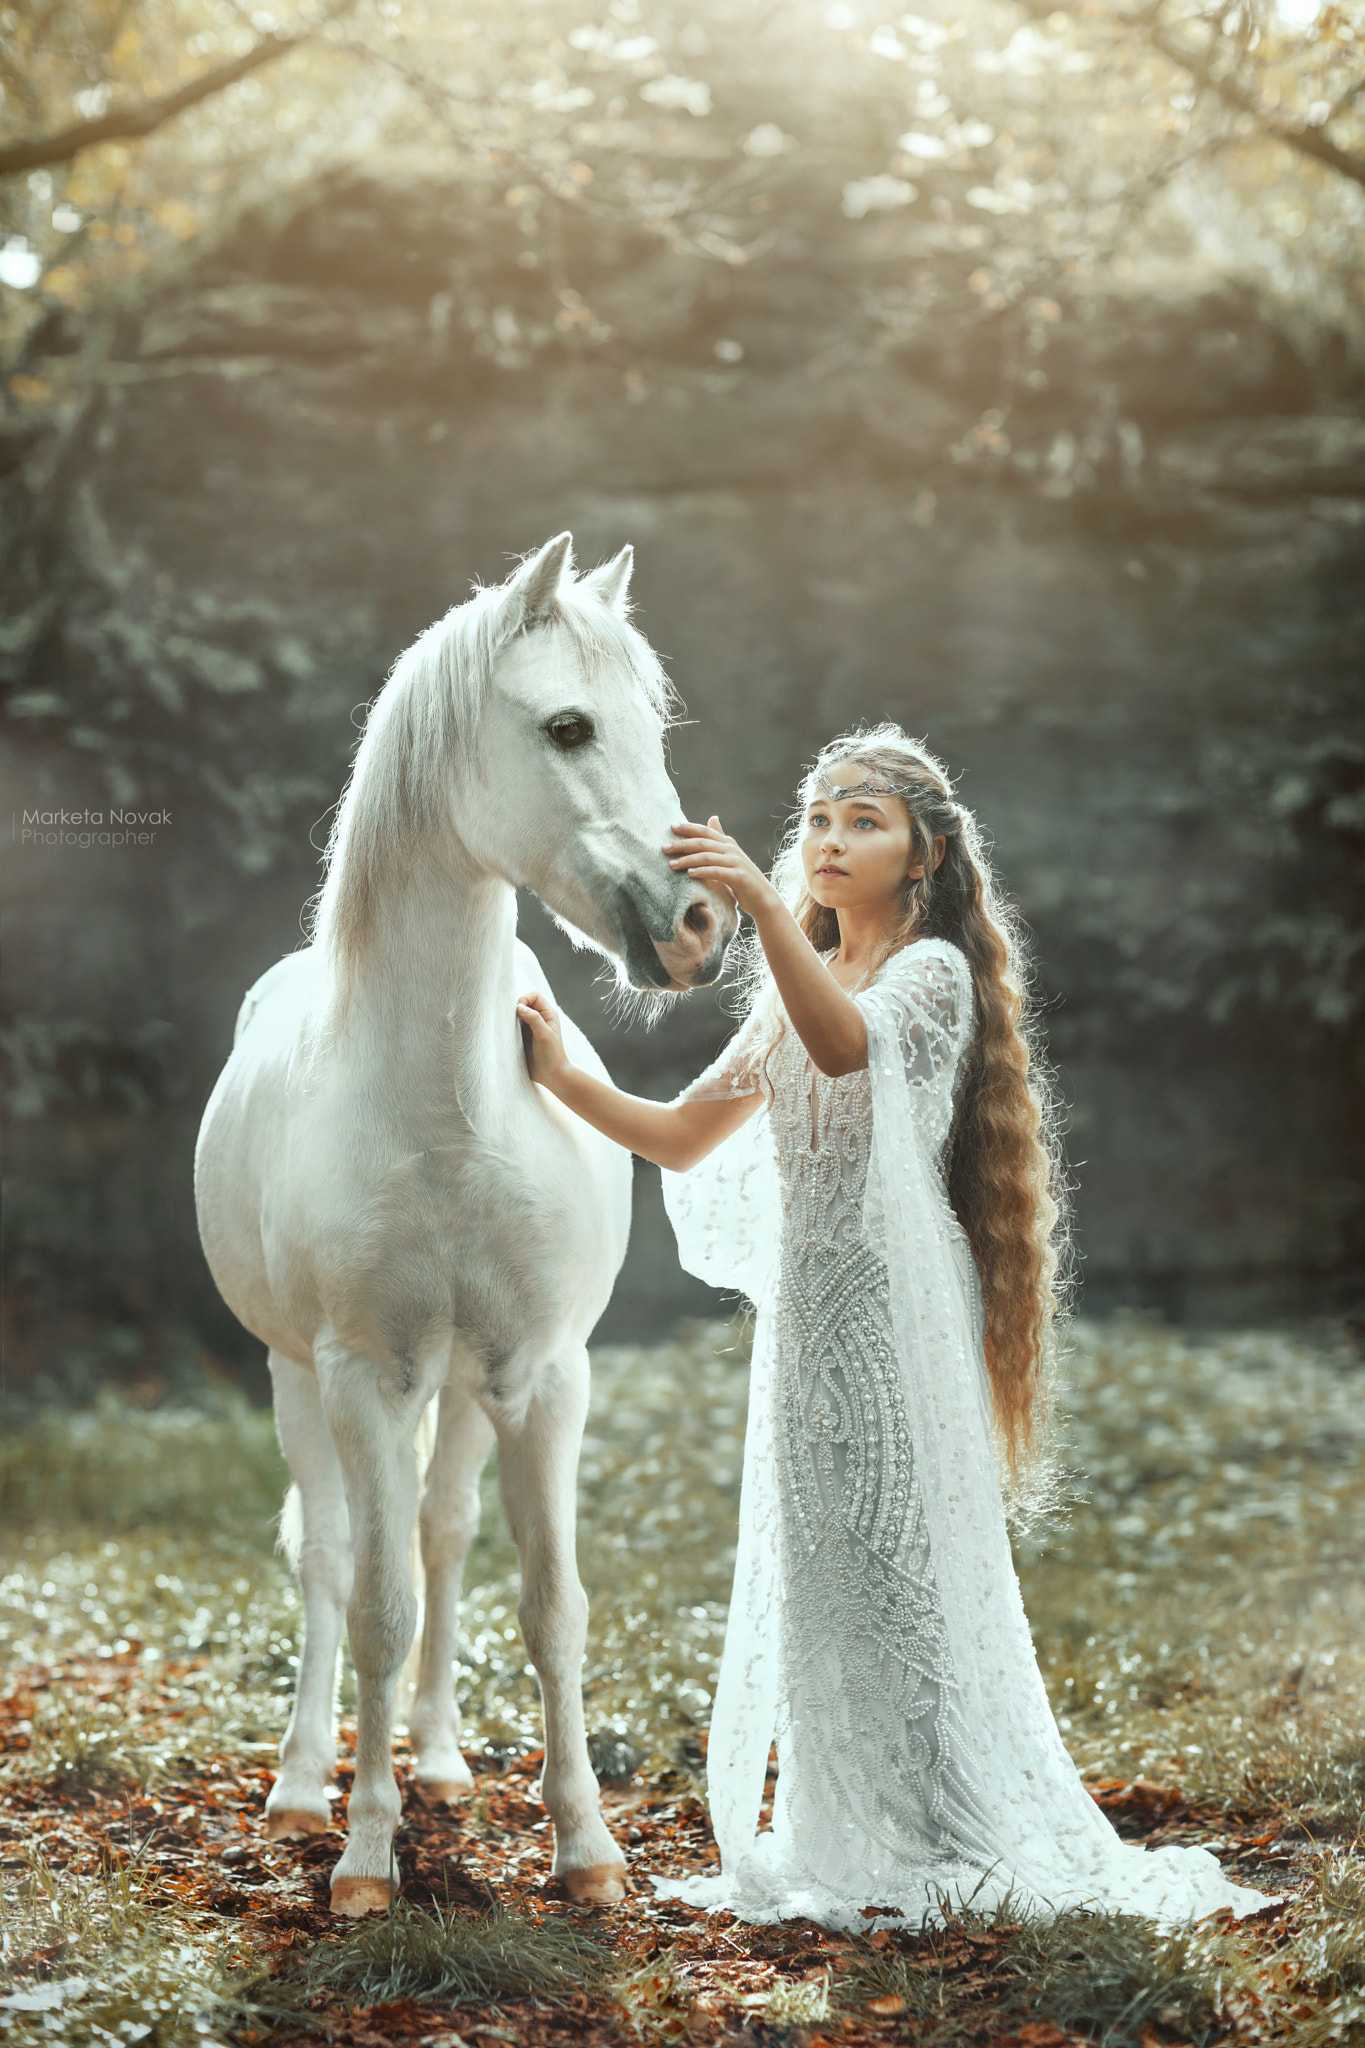 Marketa Novak Women Amalka Sykorova Horse White Dress Sunlight 1365x2048